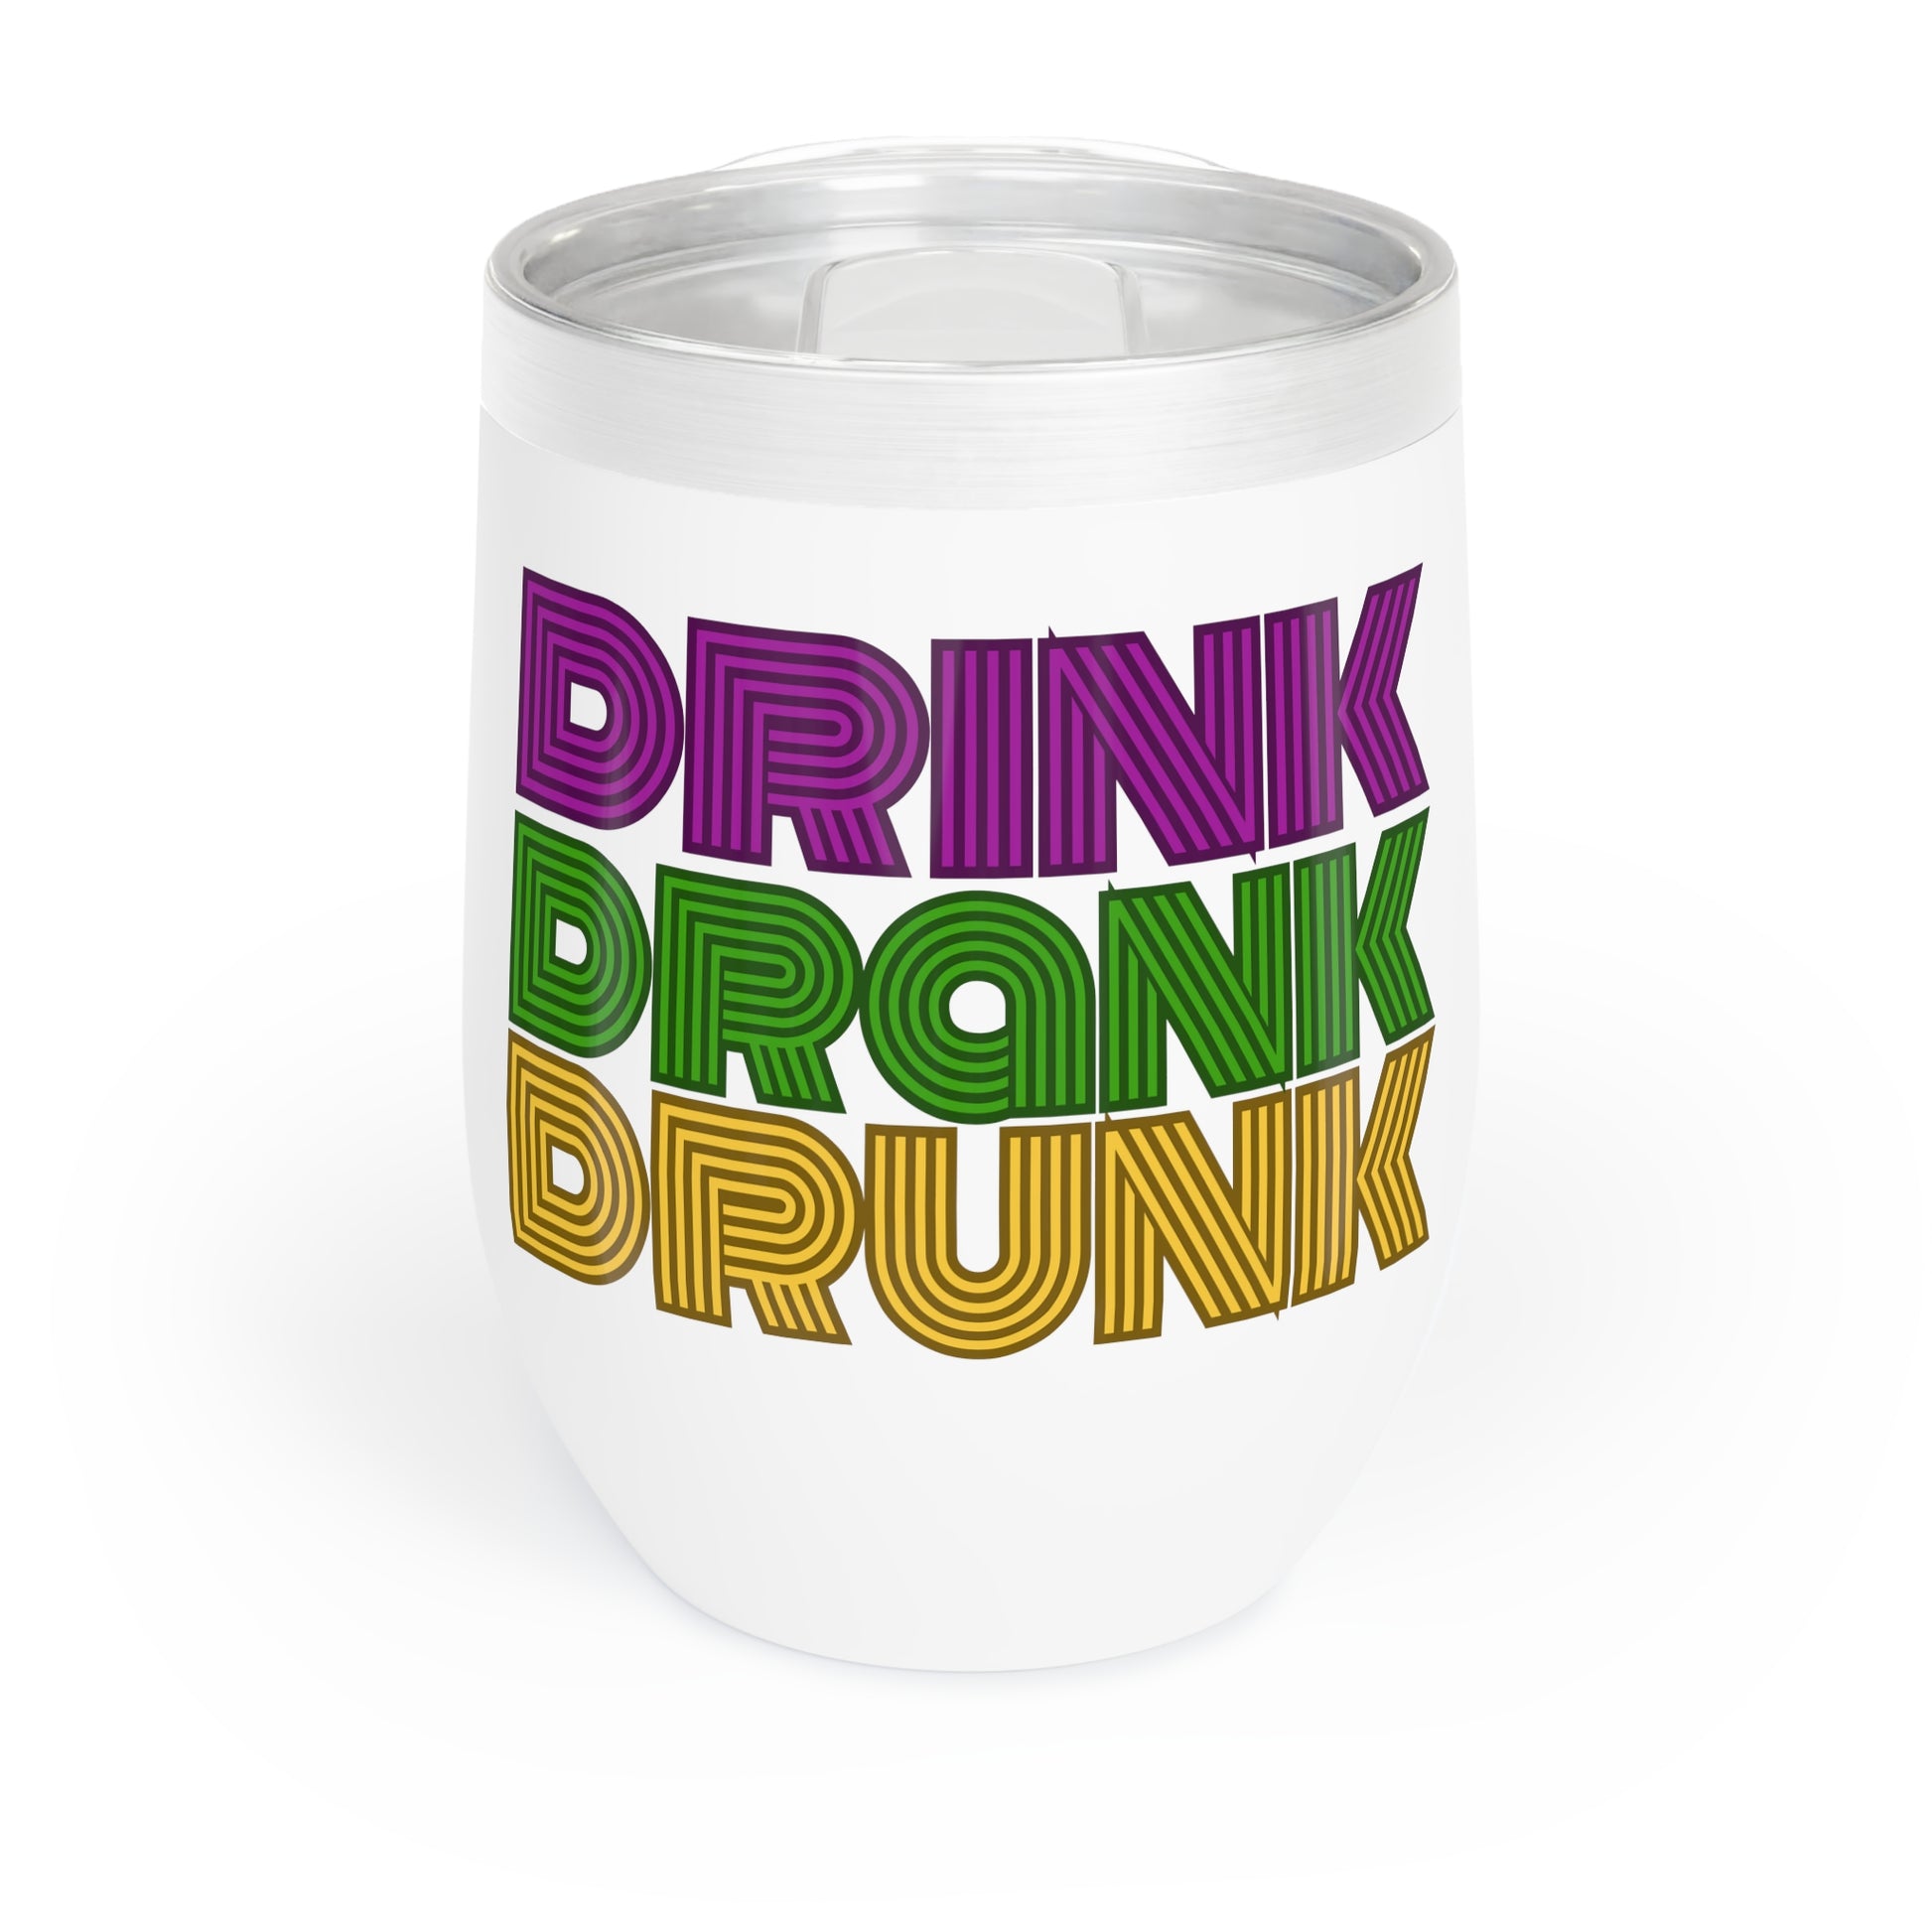 mardi gras themed wine tumbler that says "drink drank drunk"